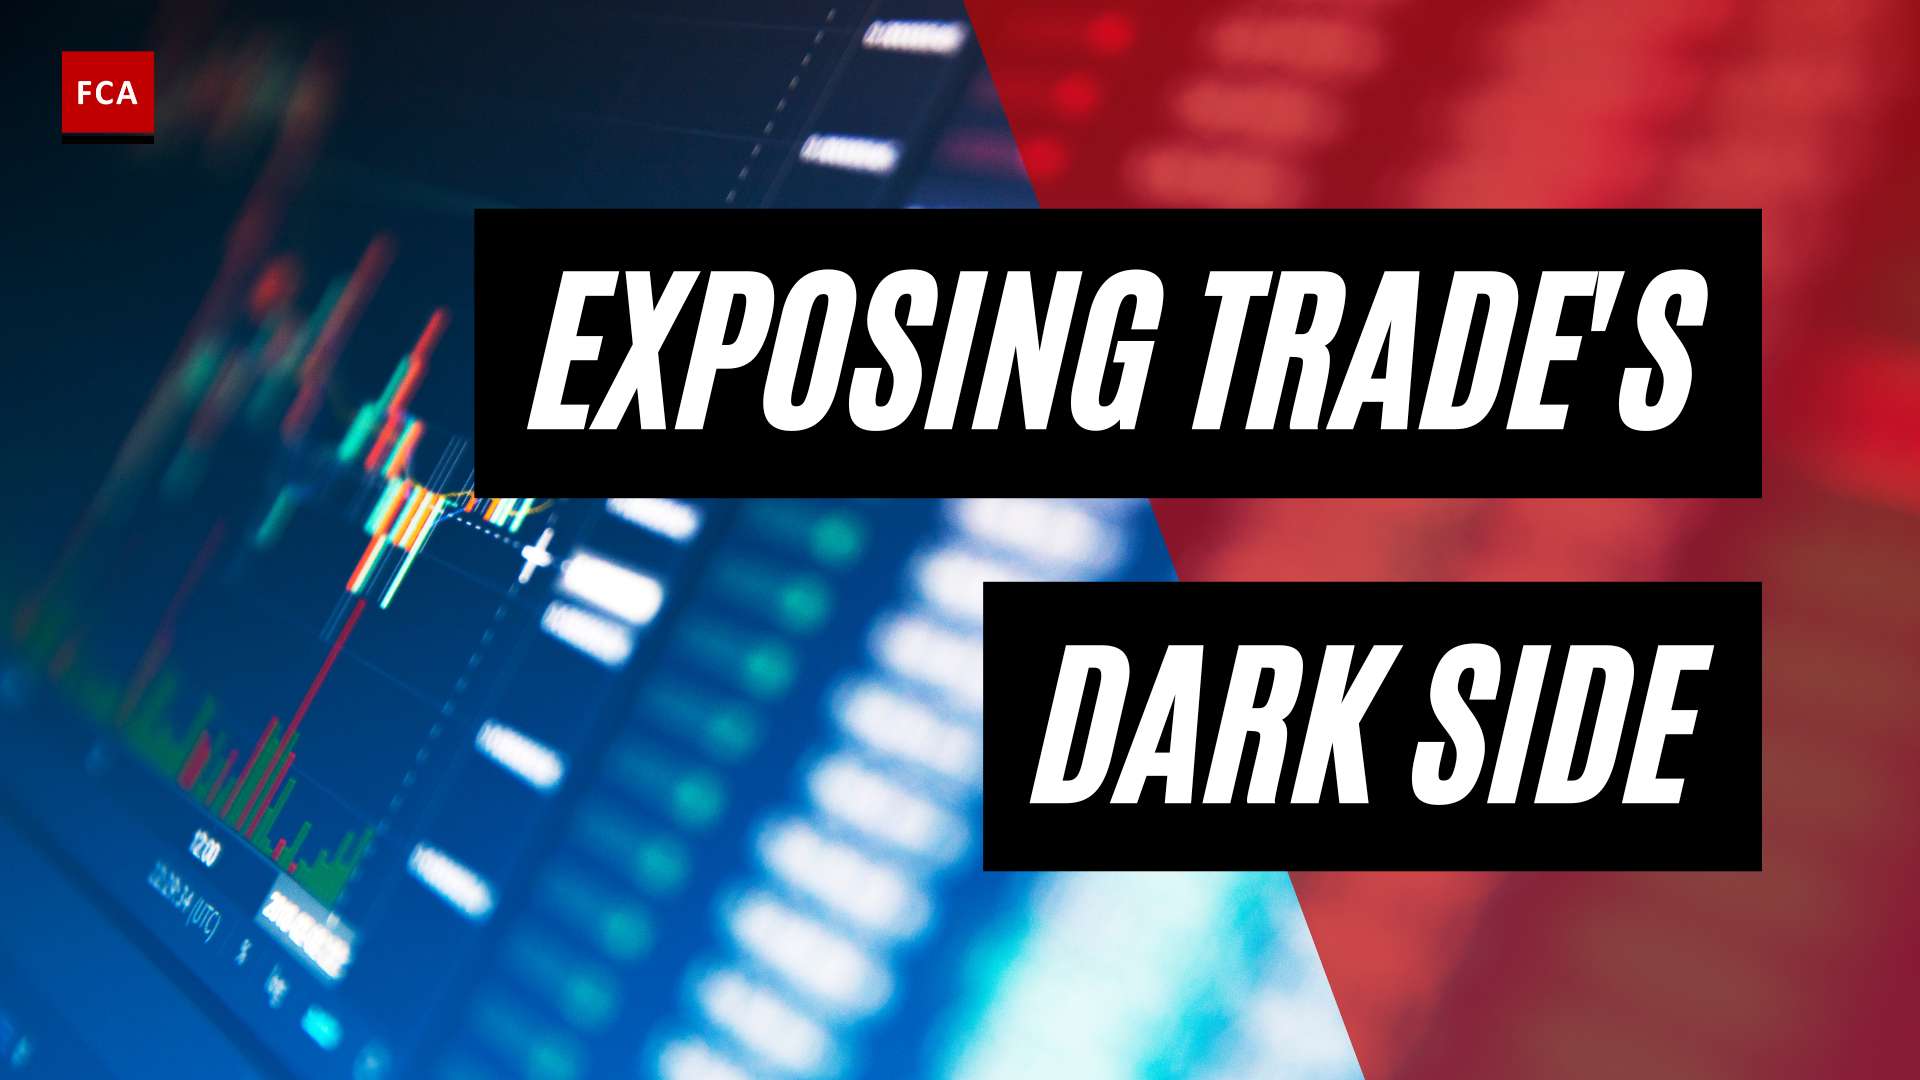 Unmasking The Dark Side: Money Laundering Through Trade Exposed